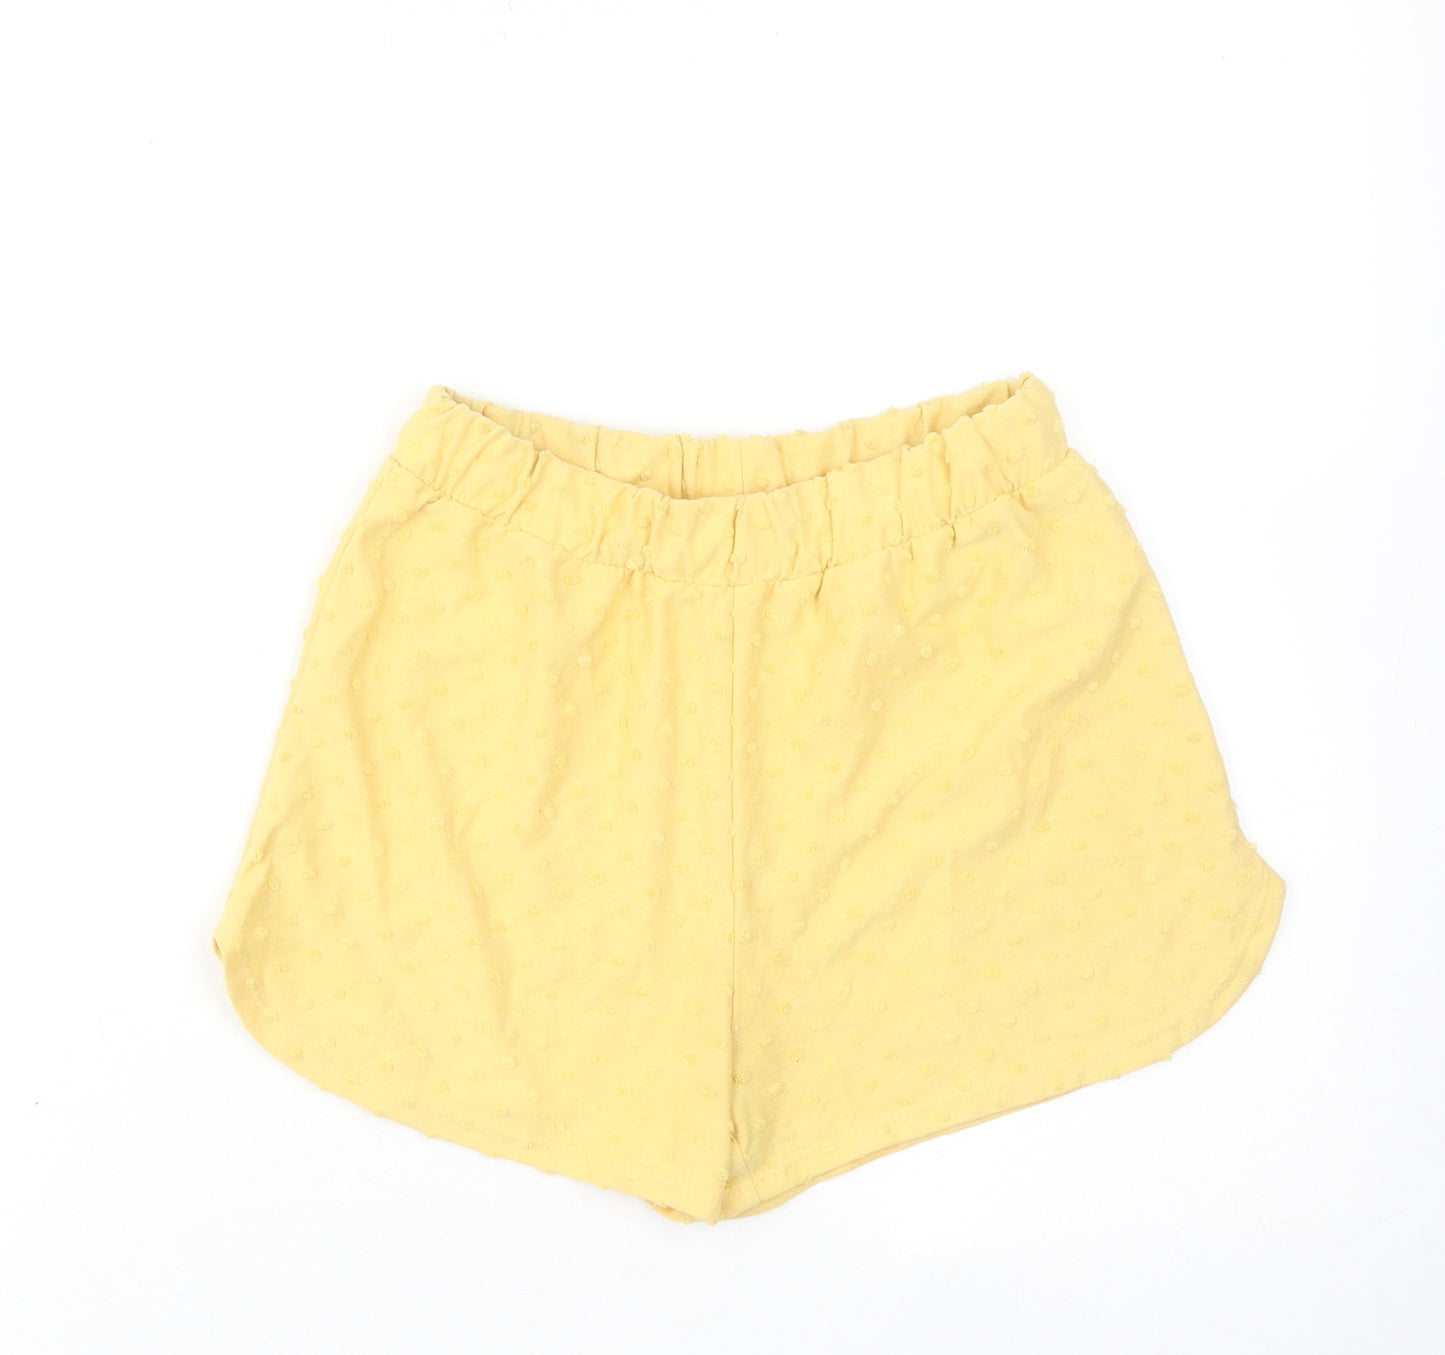 H&M Girls Yellow Polyester Bermuda Shorts Size 9-10 Years Regular - Textured